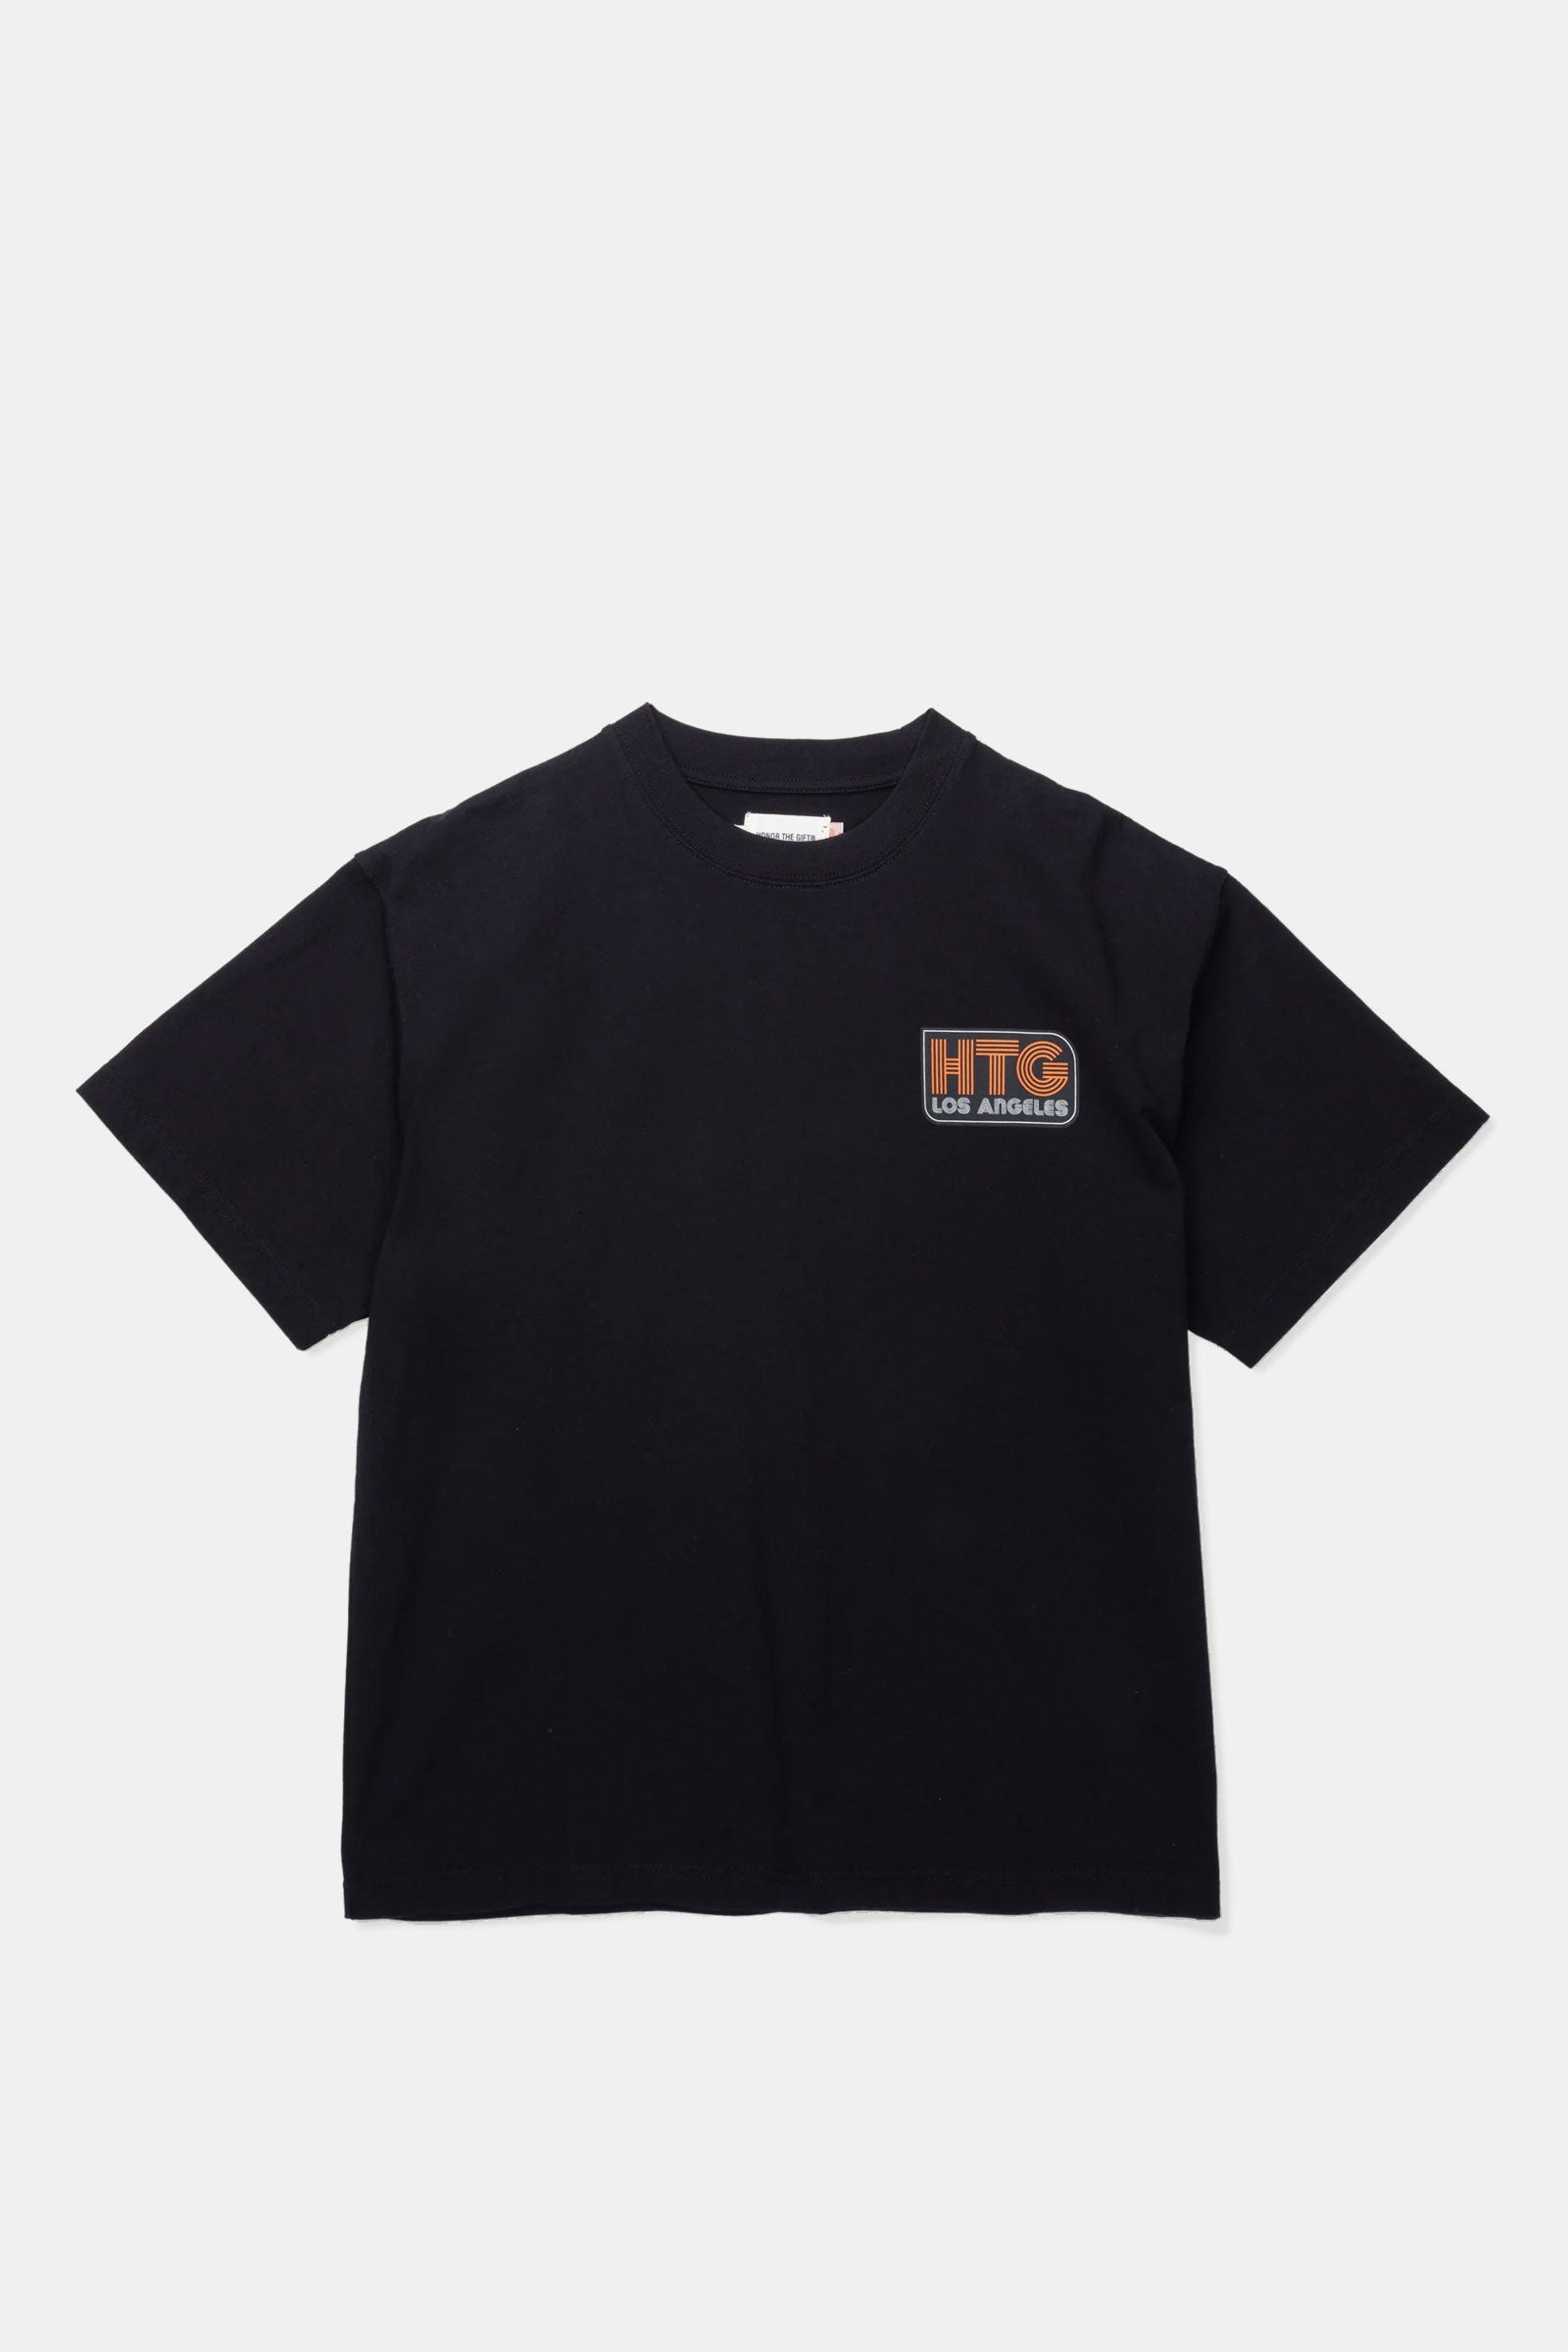 HTG Los Angeles T-Shirt